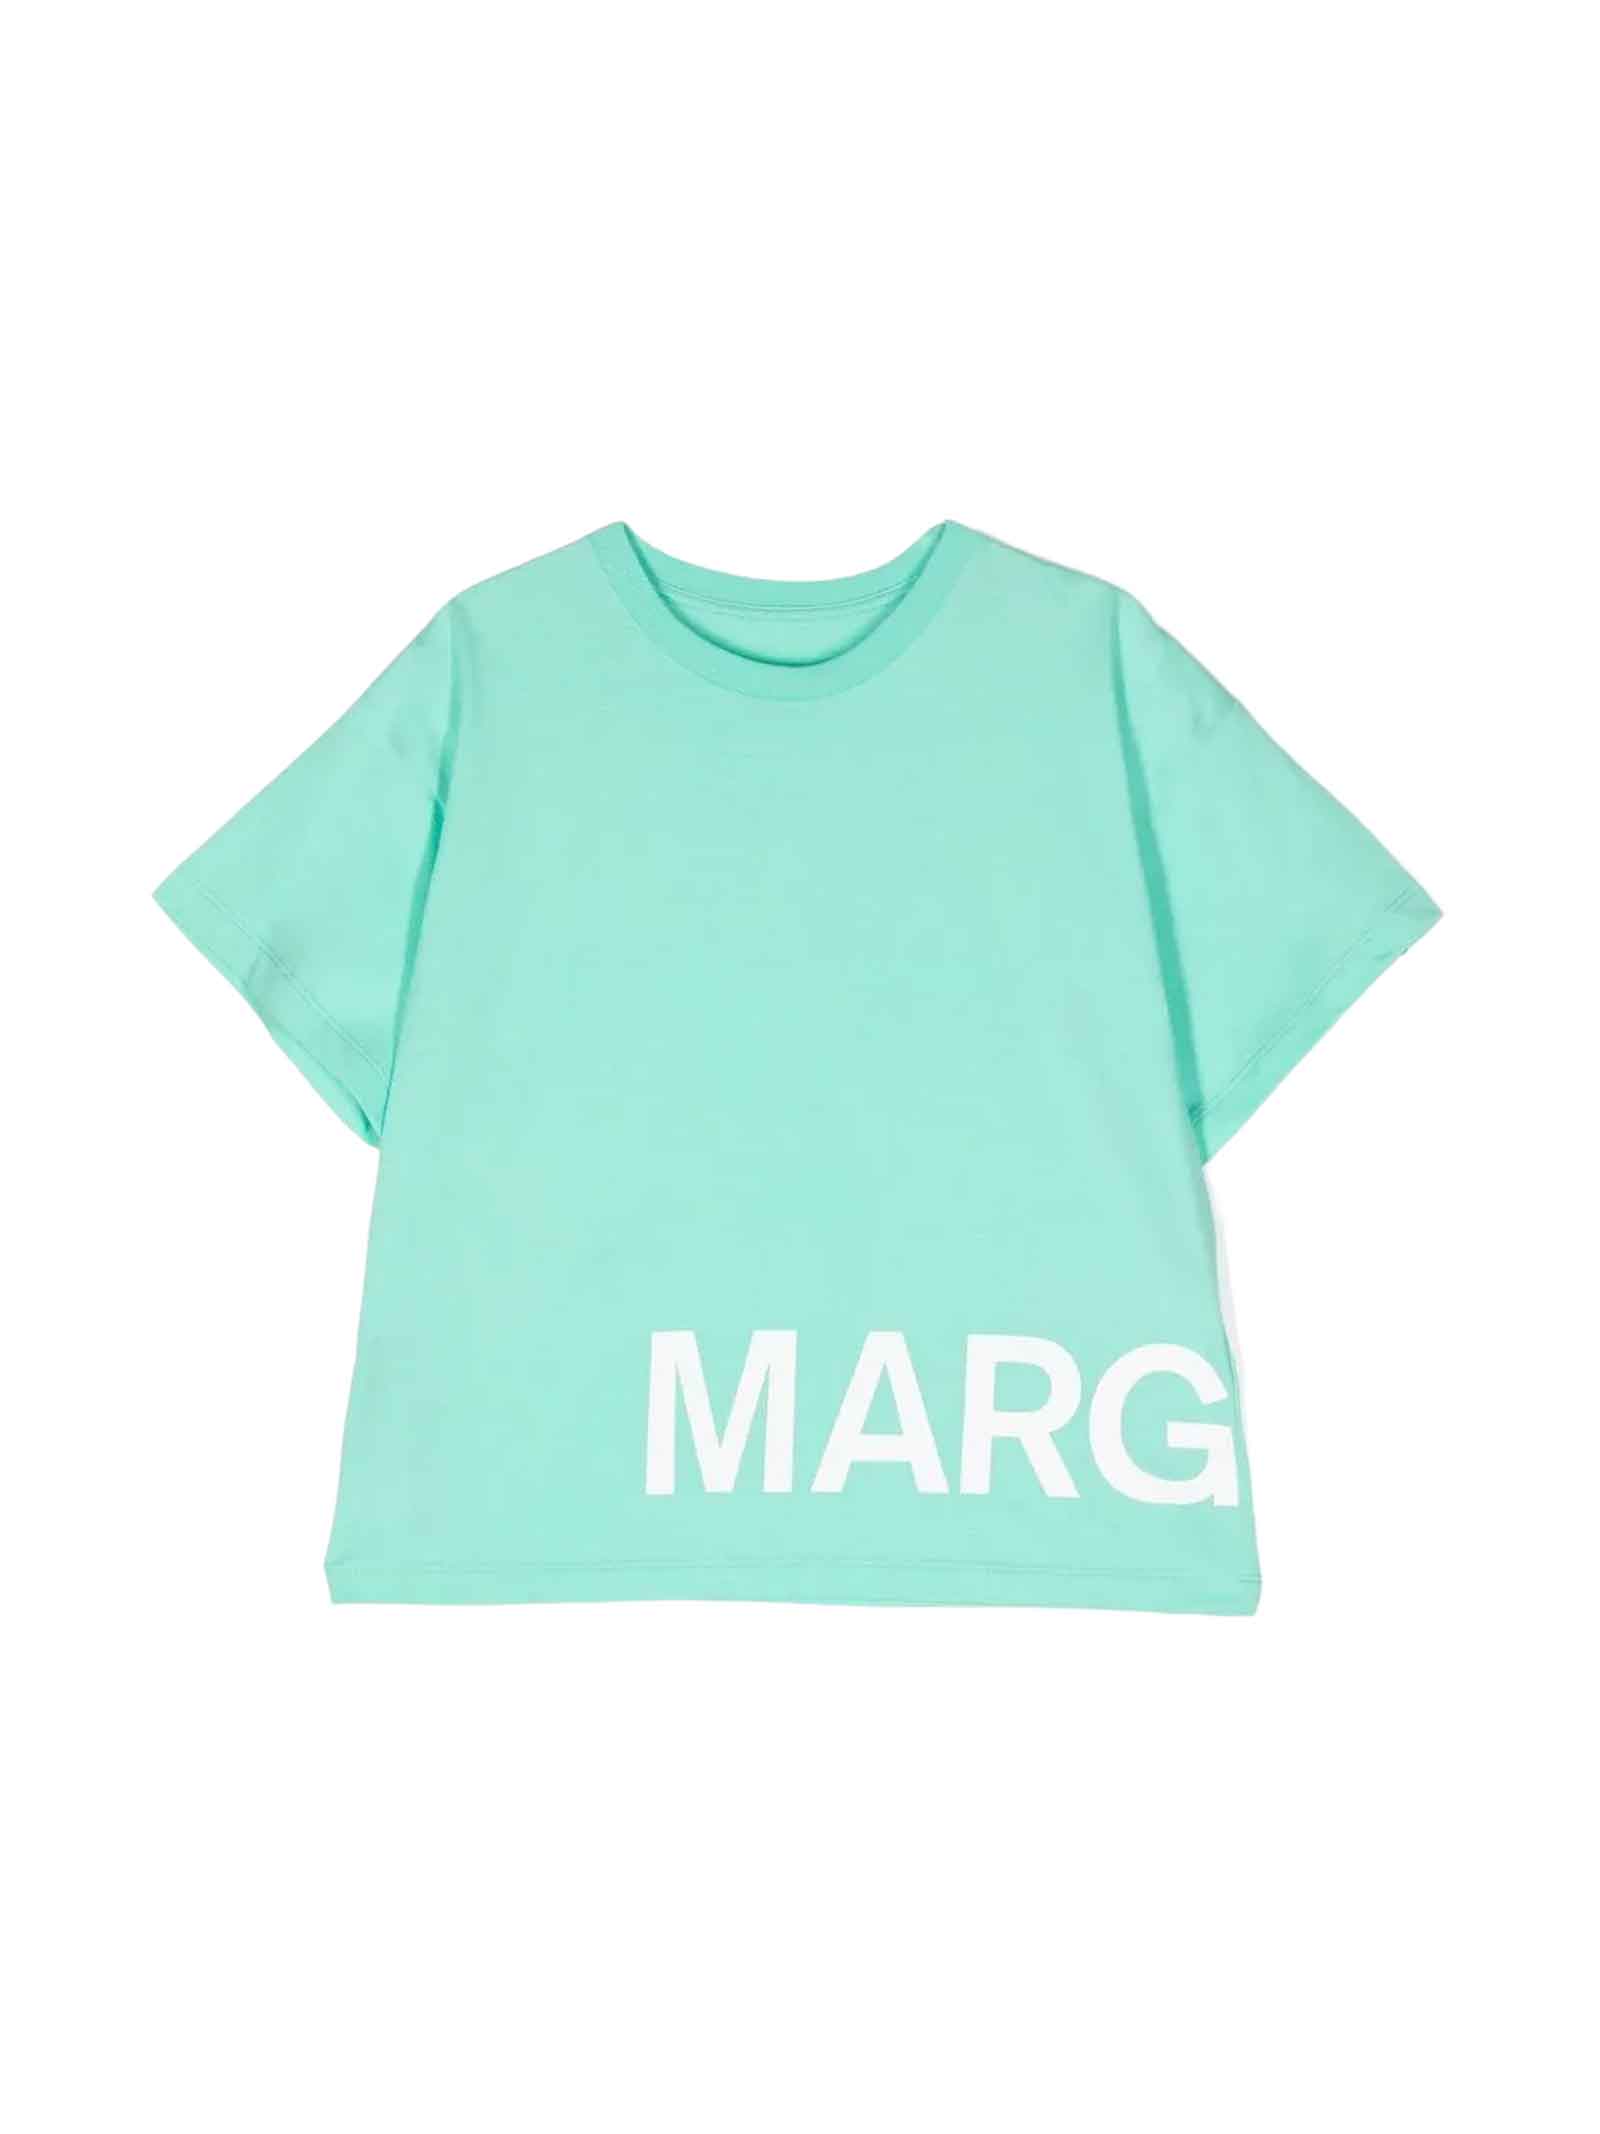 MM6 MAISON MARGIELA BLUE T-SHIRT UNISEX